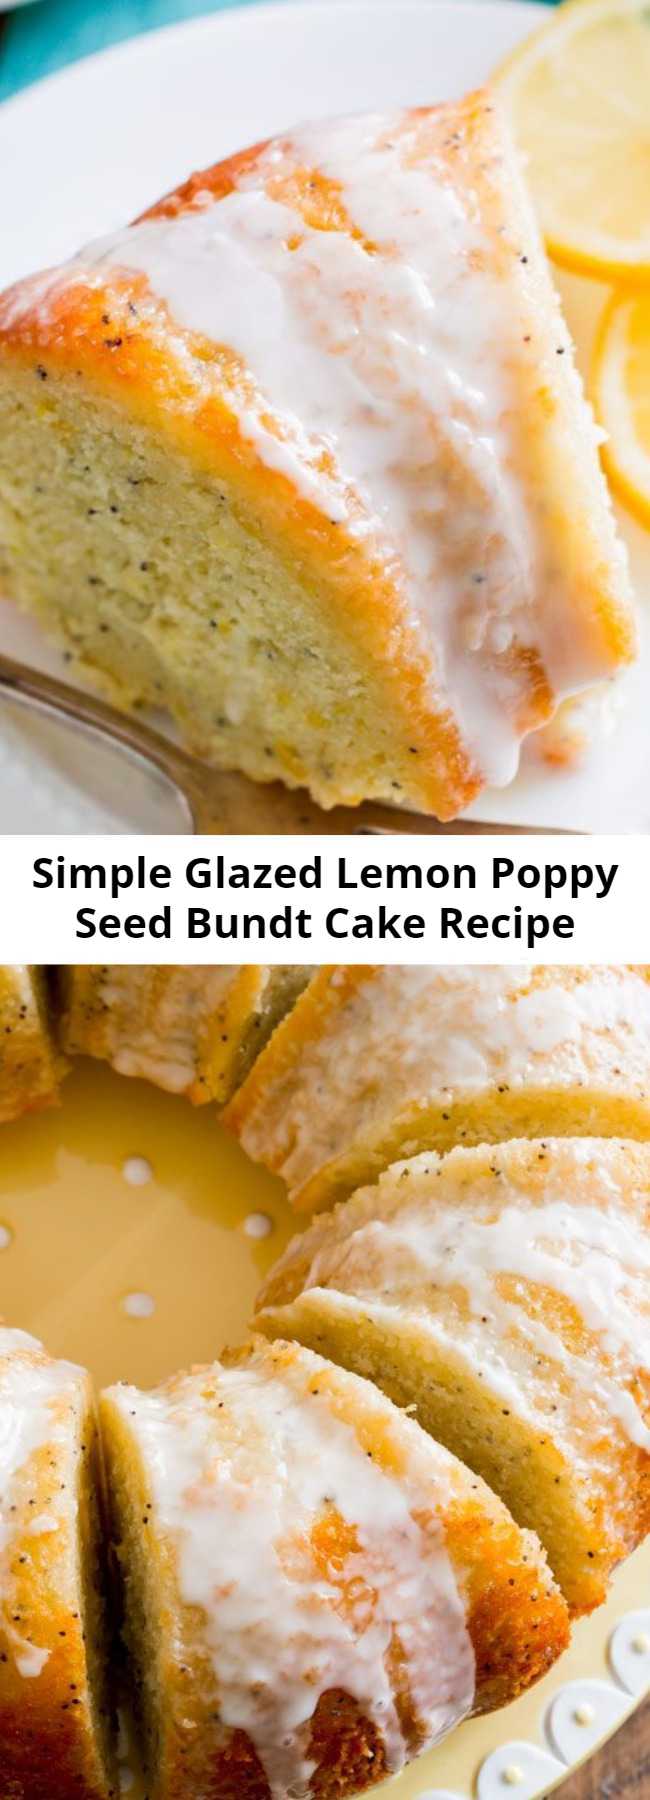 Simple Glazed Lemon Poppy Seed Bundt Cake Recipe - Sweet, simple, luscious glazed lemon poppy seed bundt cake to bring sunshine to even the coldest of days.